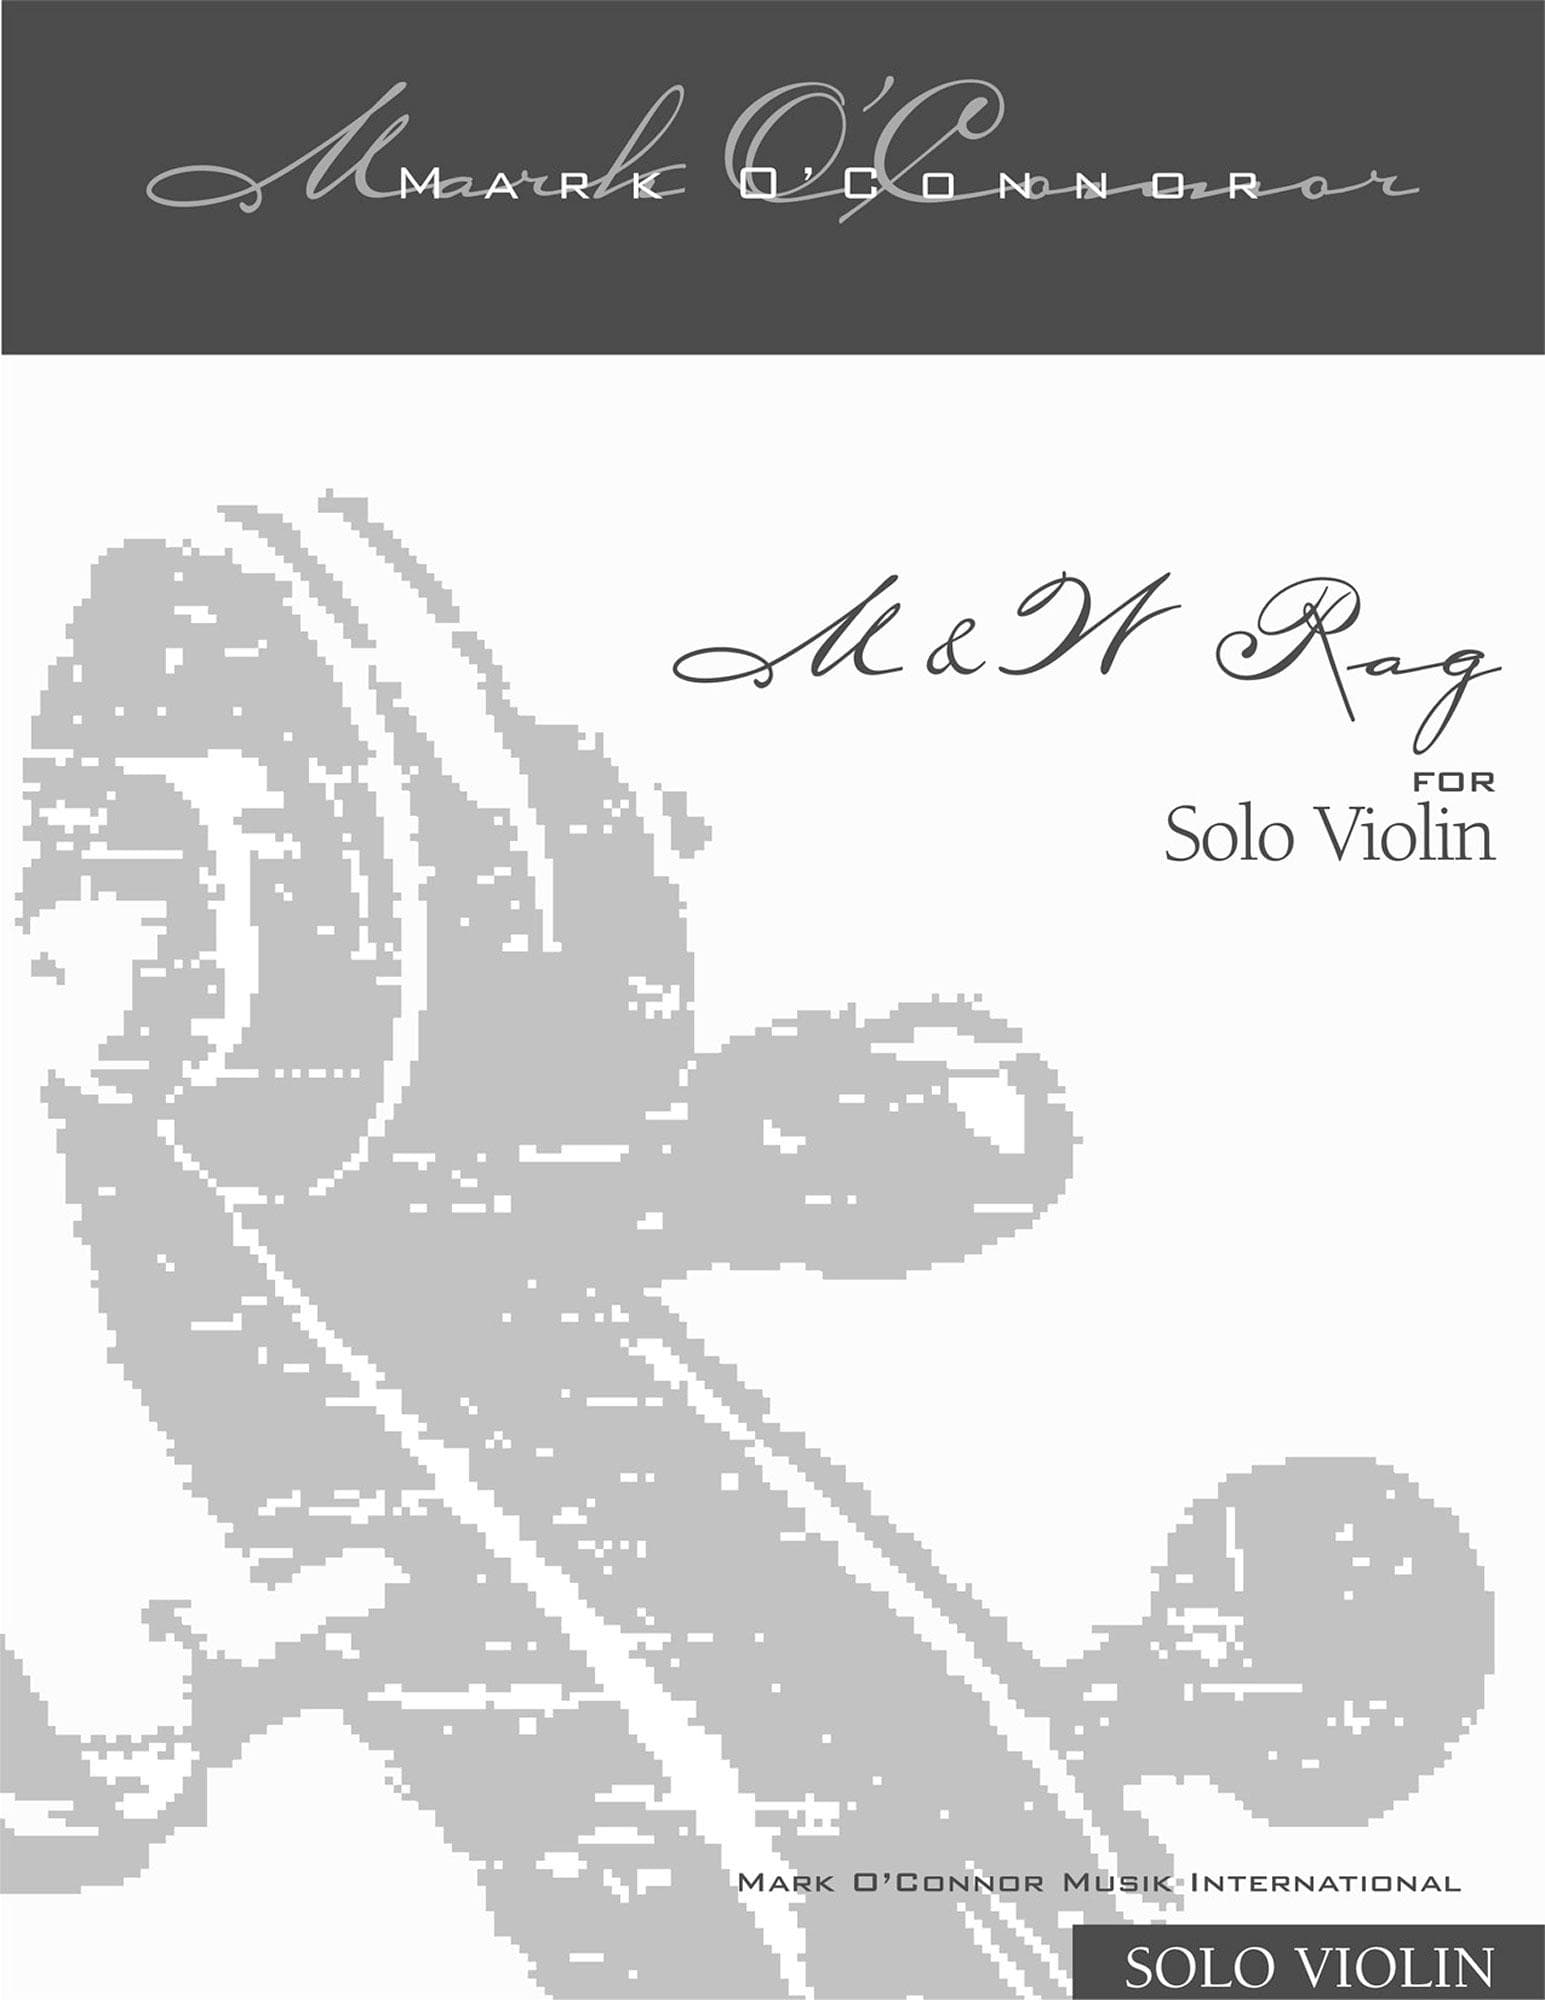 O'Connor, Mark - M & W Rag - Violin - Digital Download